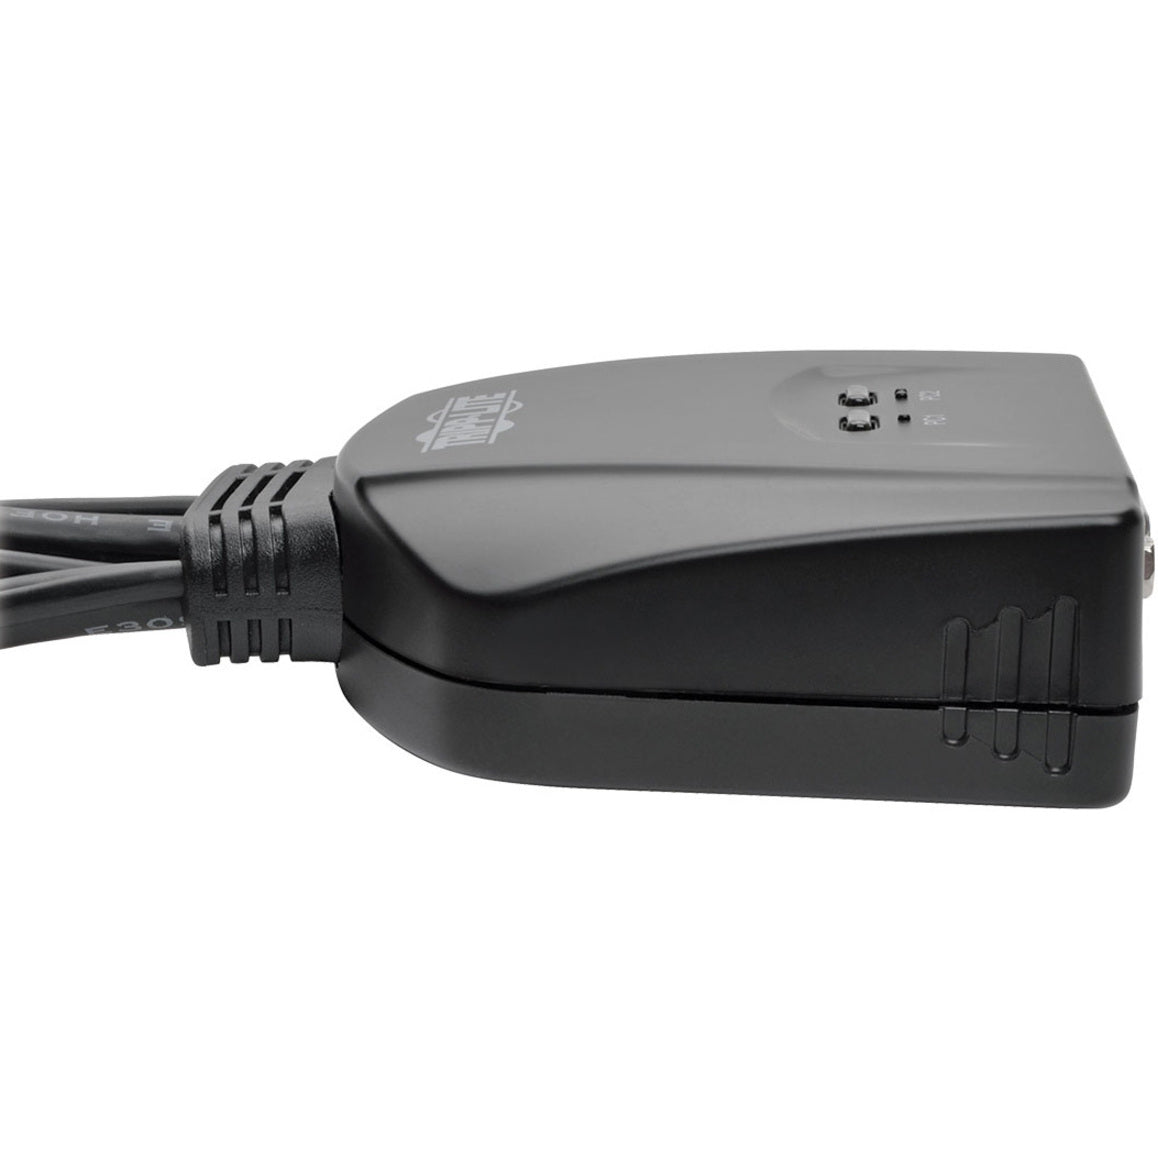 Tripp Lite B032-VU2 2-端口USB/VGA电缆KVM切换器套装，2048 x 1536分辨率，3年保修  品牌名称：Tripp Lite（特力）